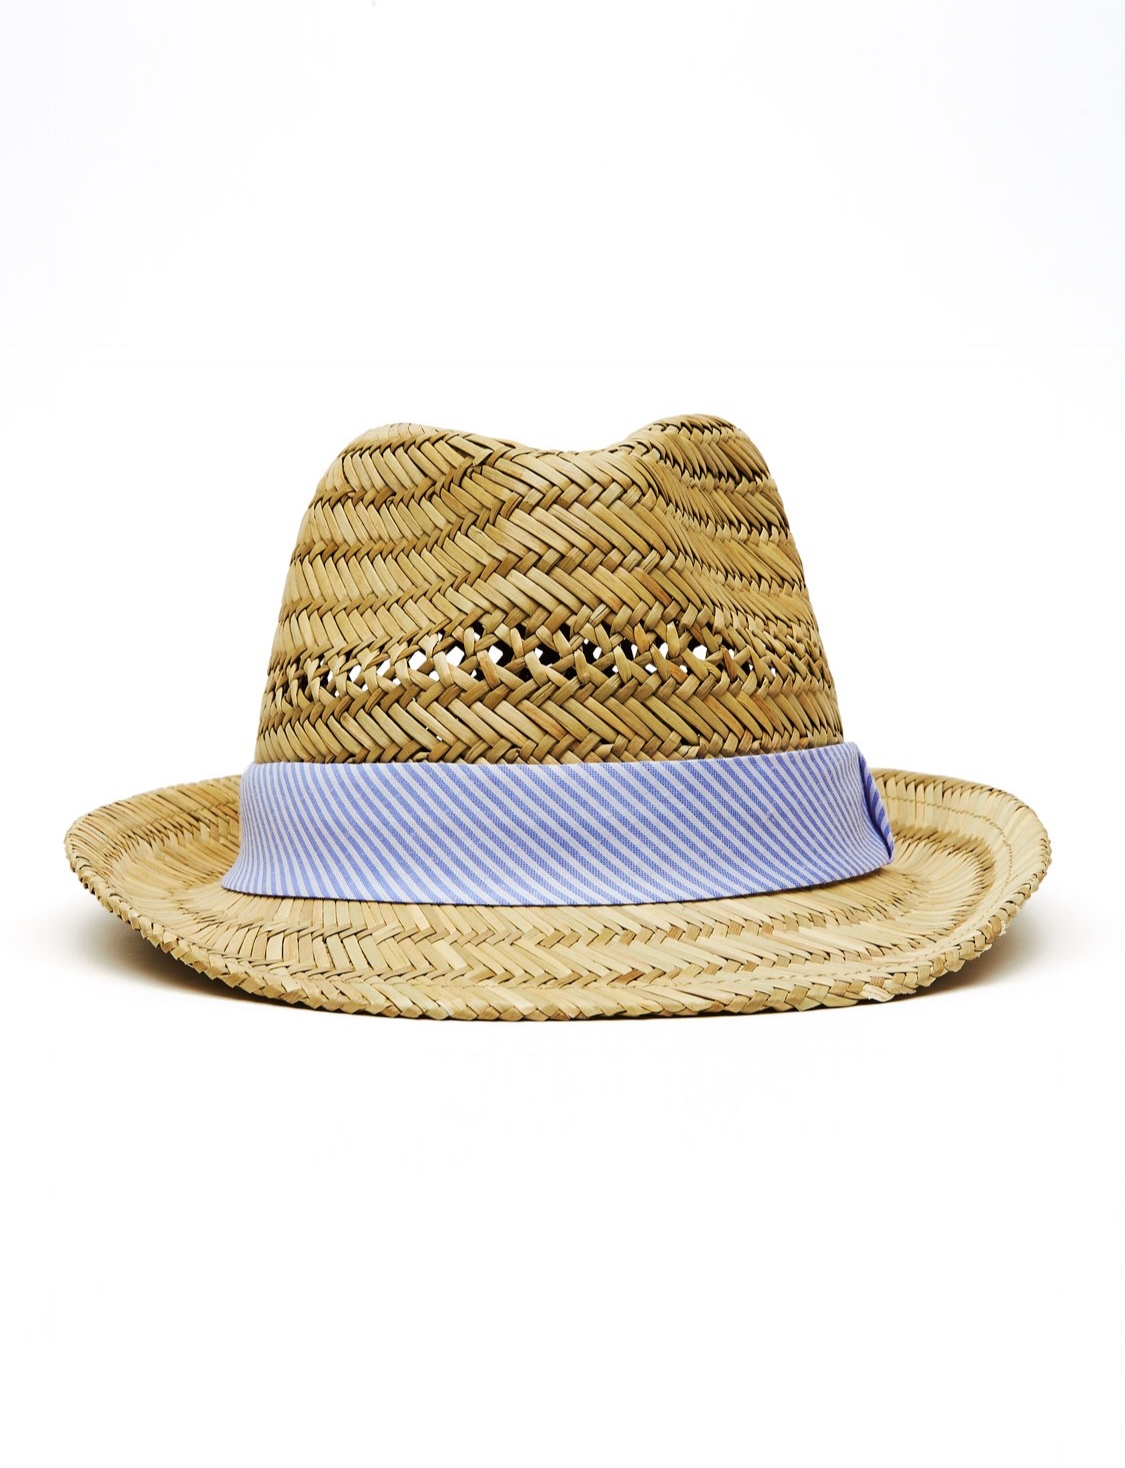 Open Panama Straw Hat